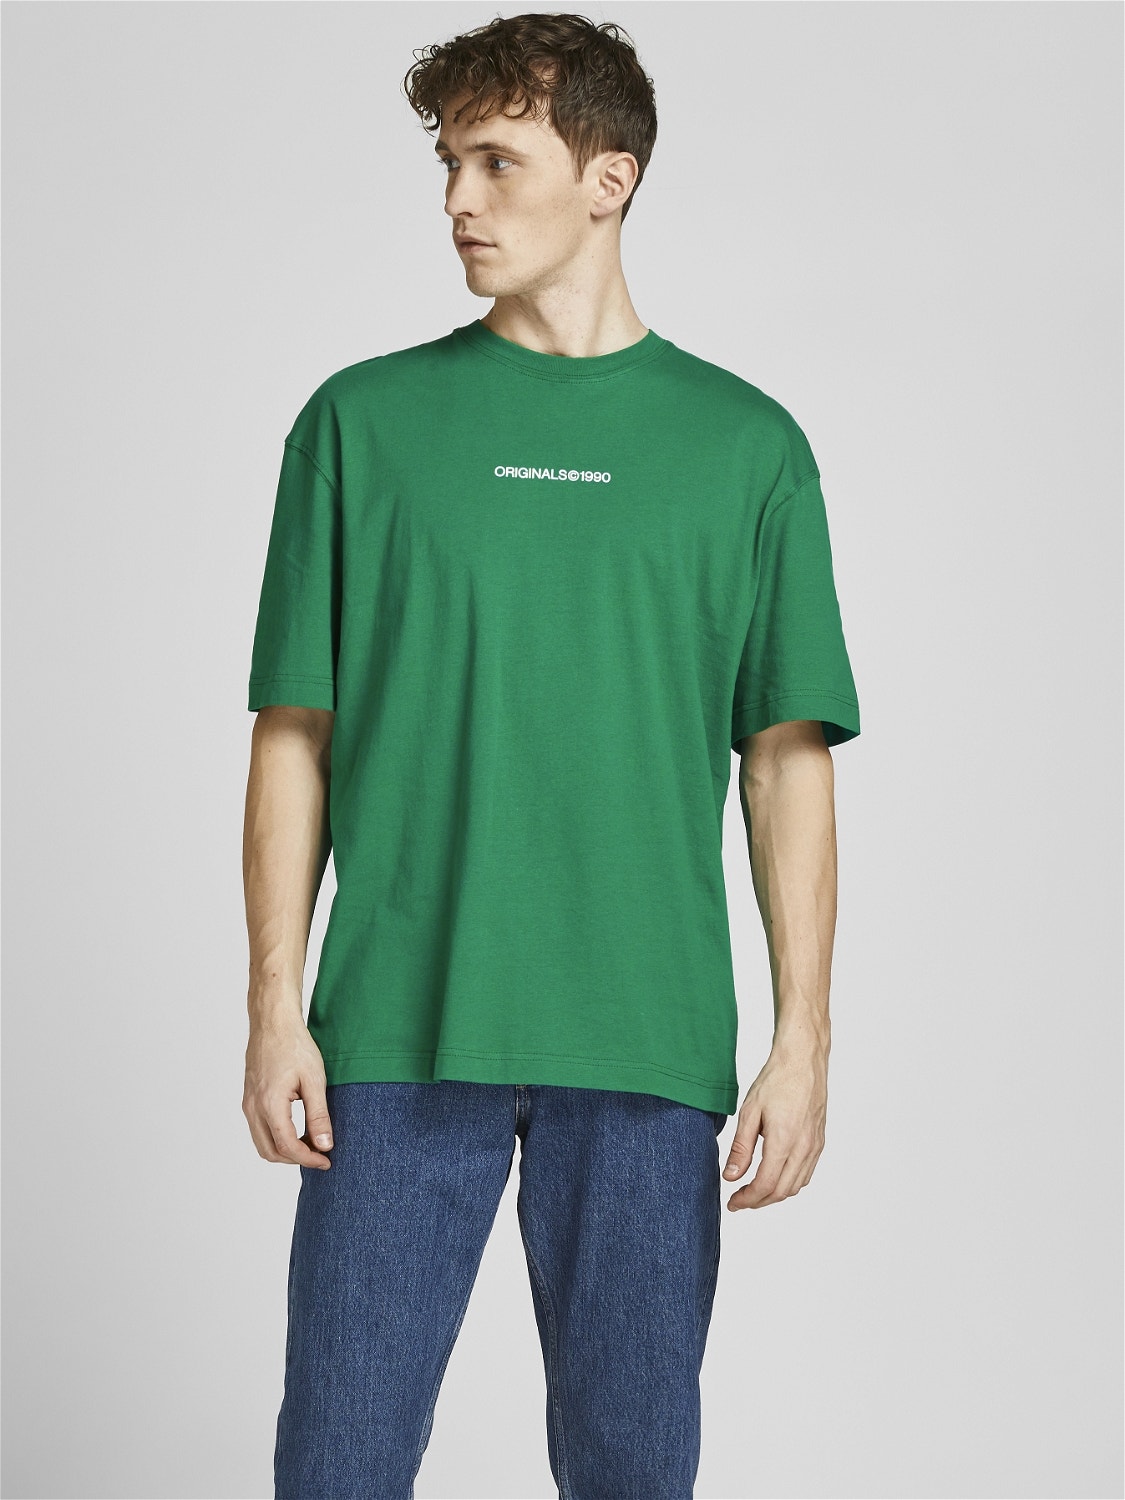 Jack & Jones Tekst Crew neck T-shirt -Lush Medow - 12210917